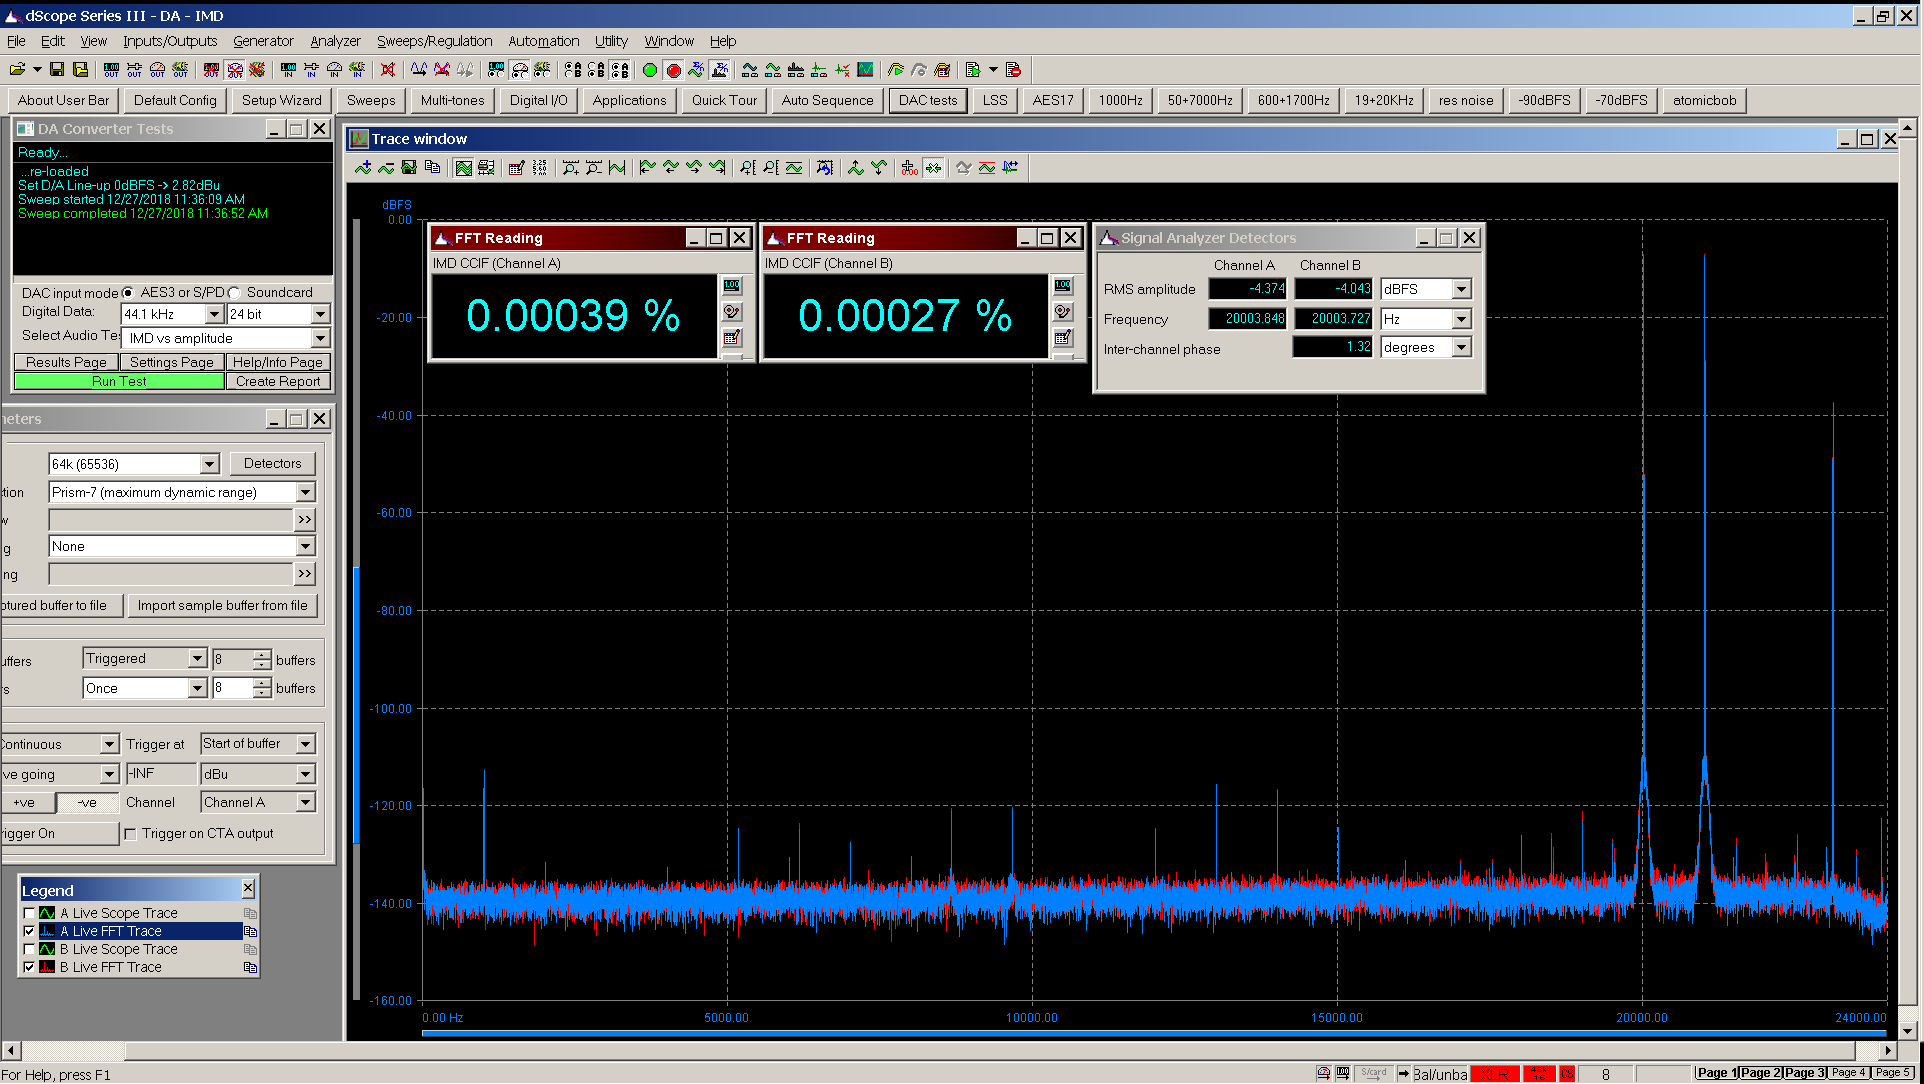 20181227-04 convert2 Bal IMD spectrum - AES.PNG